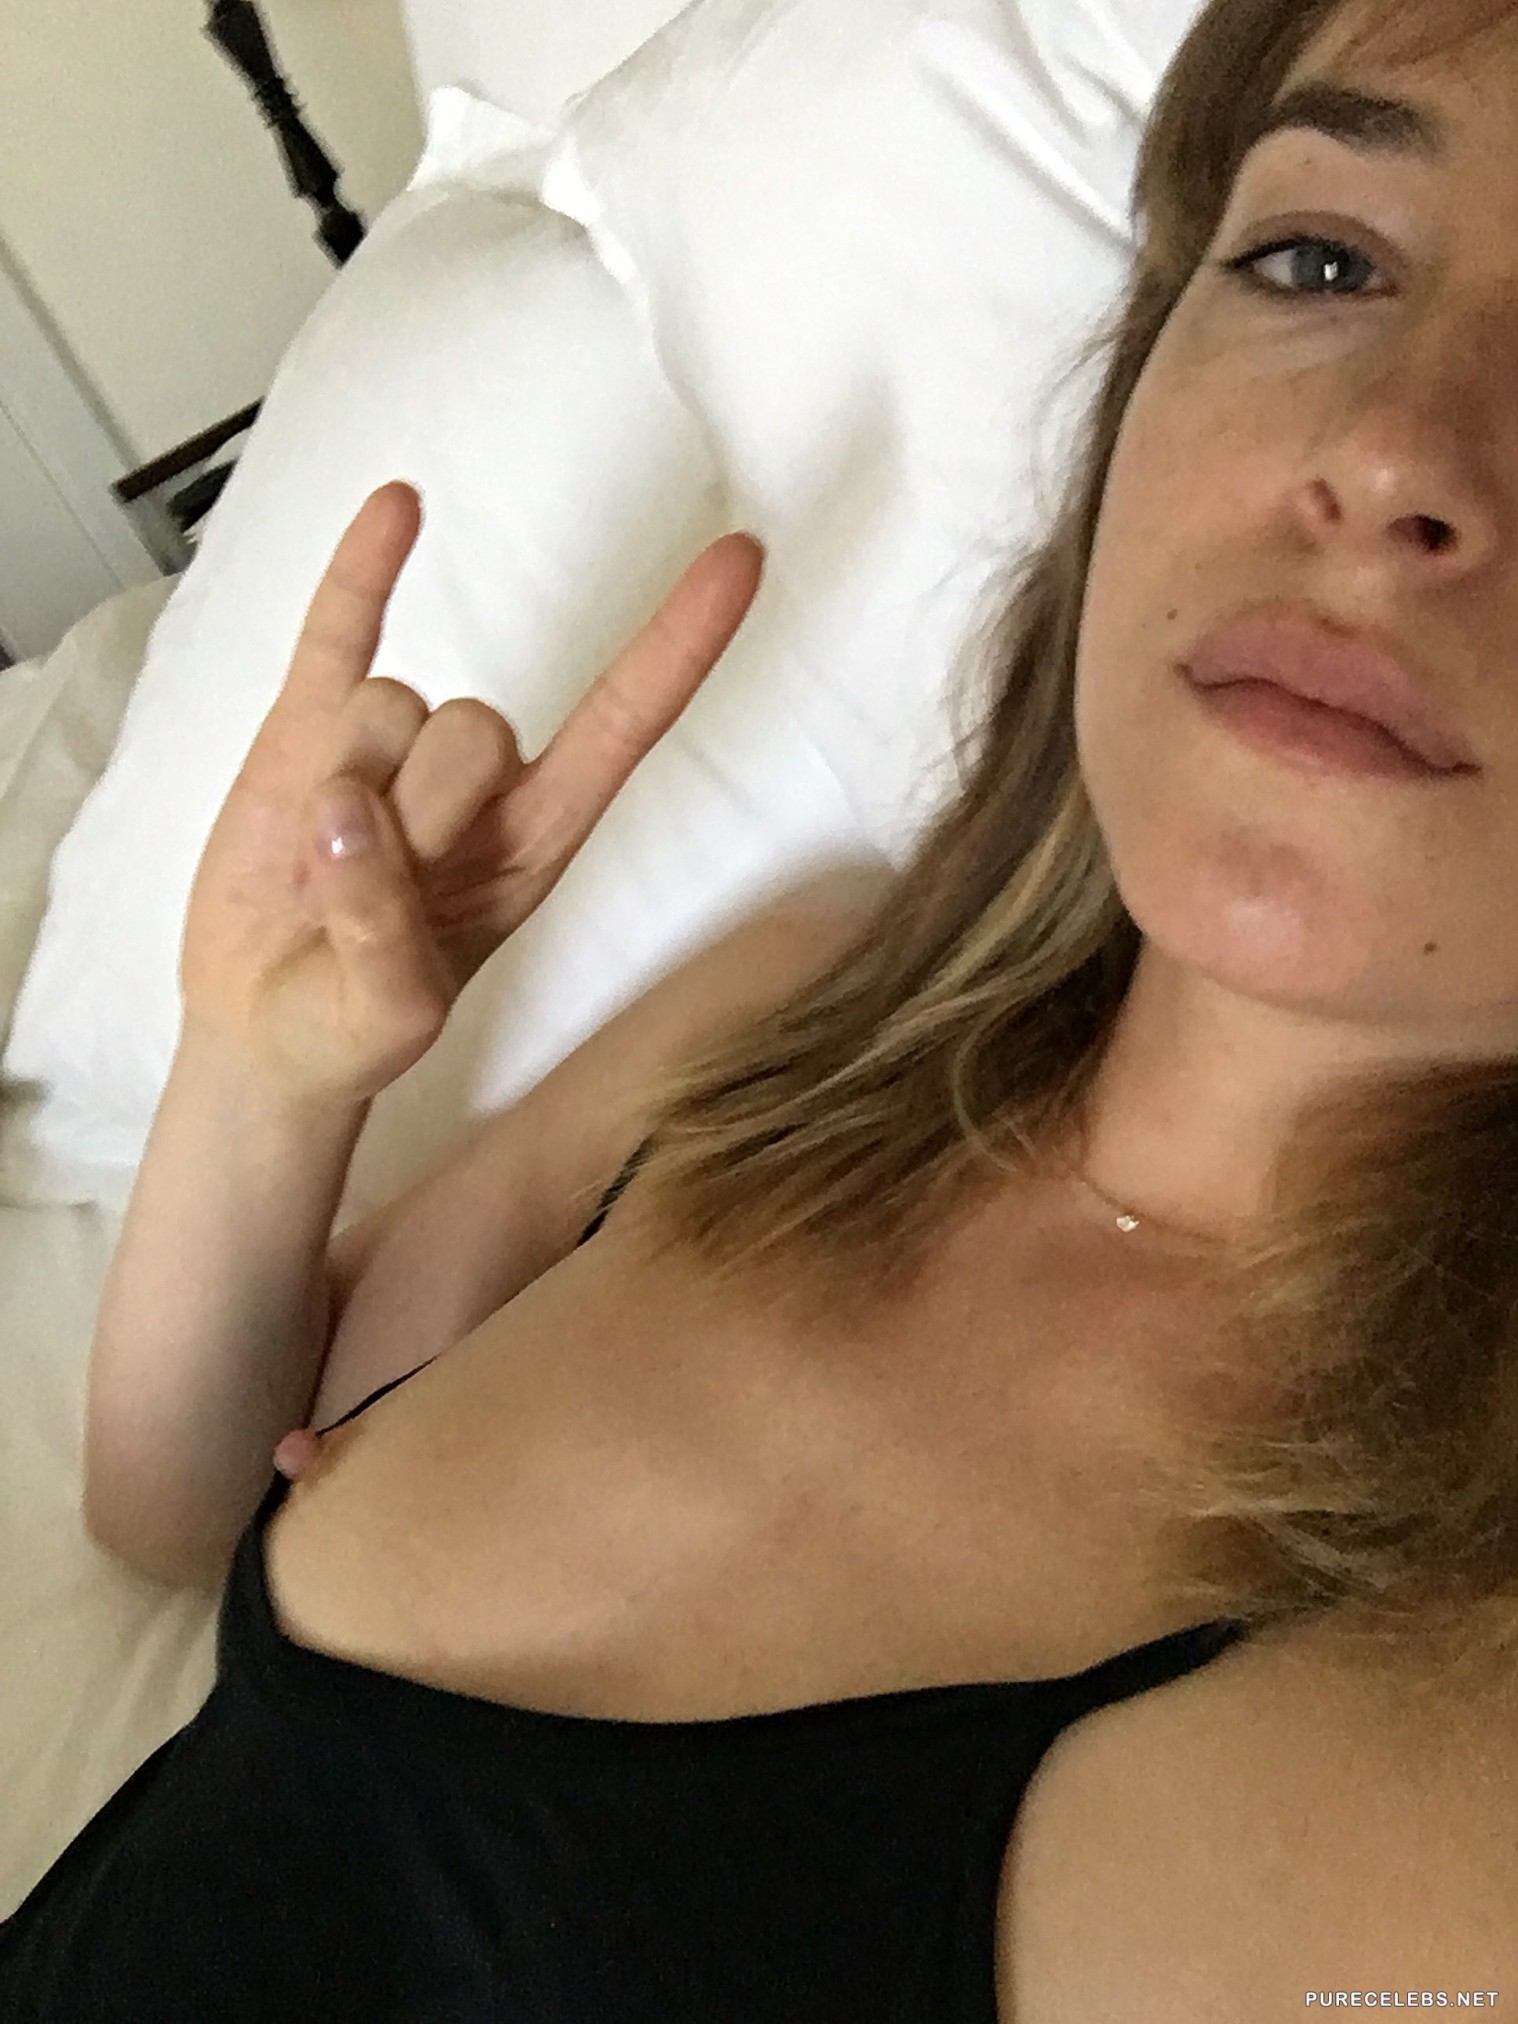 Dakota johnson leaked nude